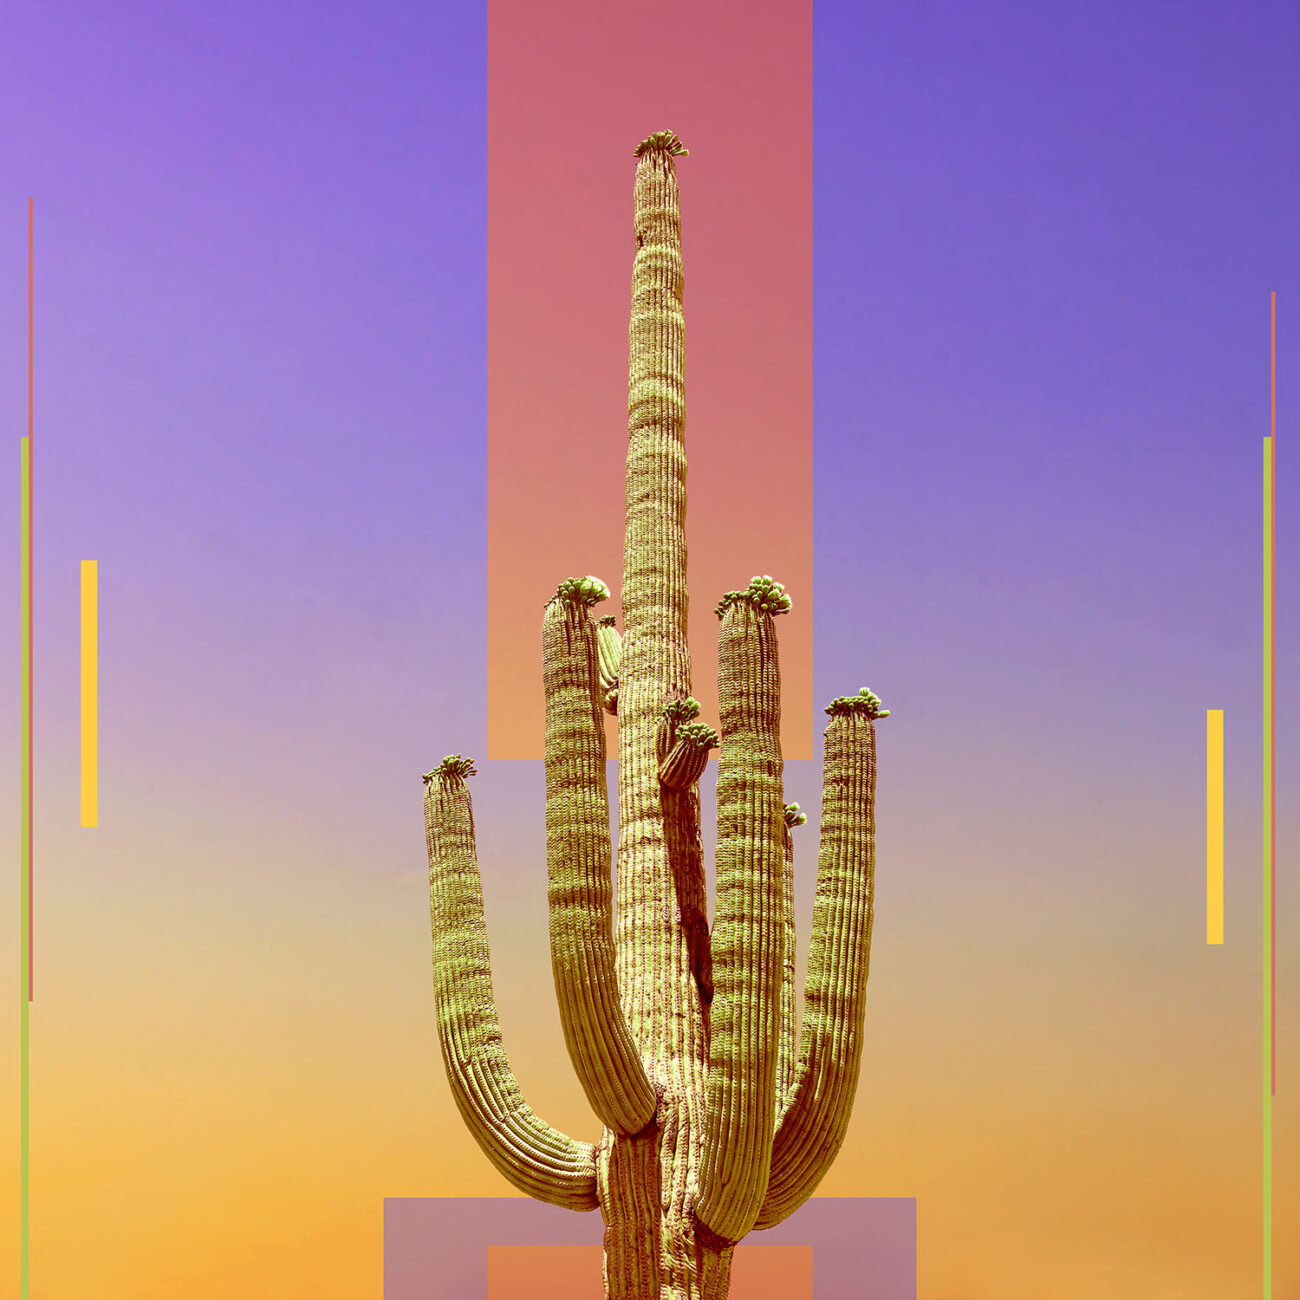 Saguaro in bloom